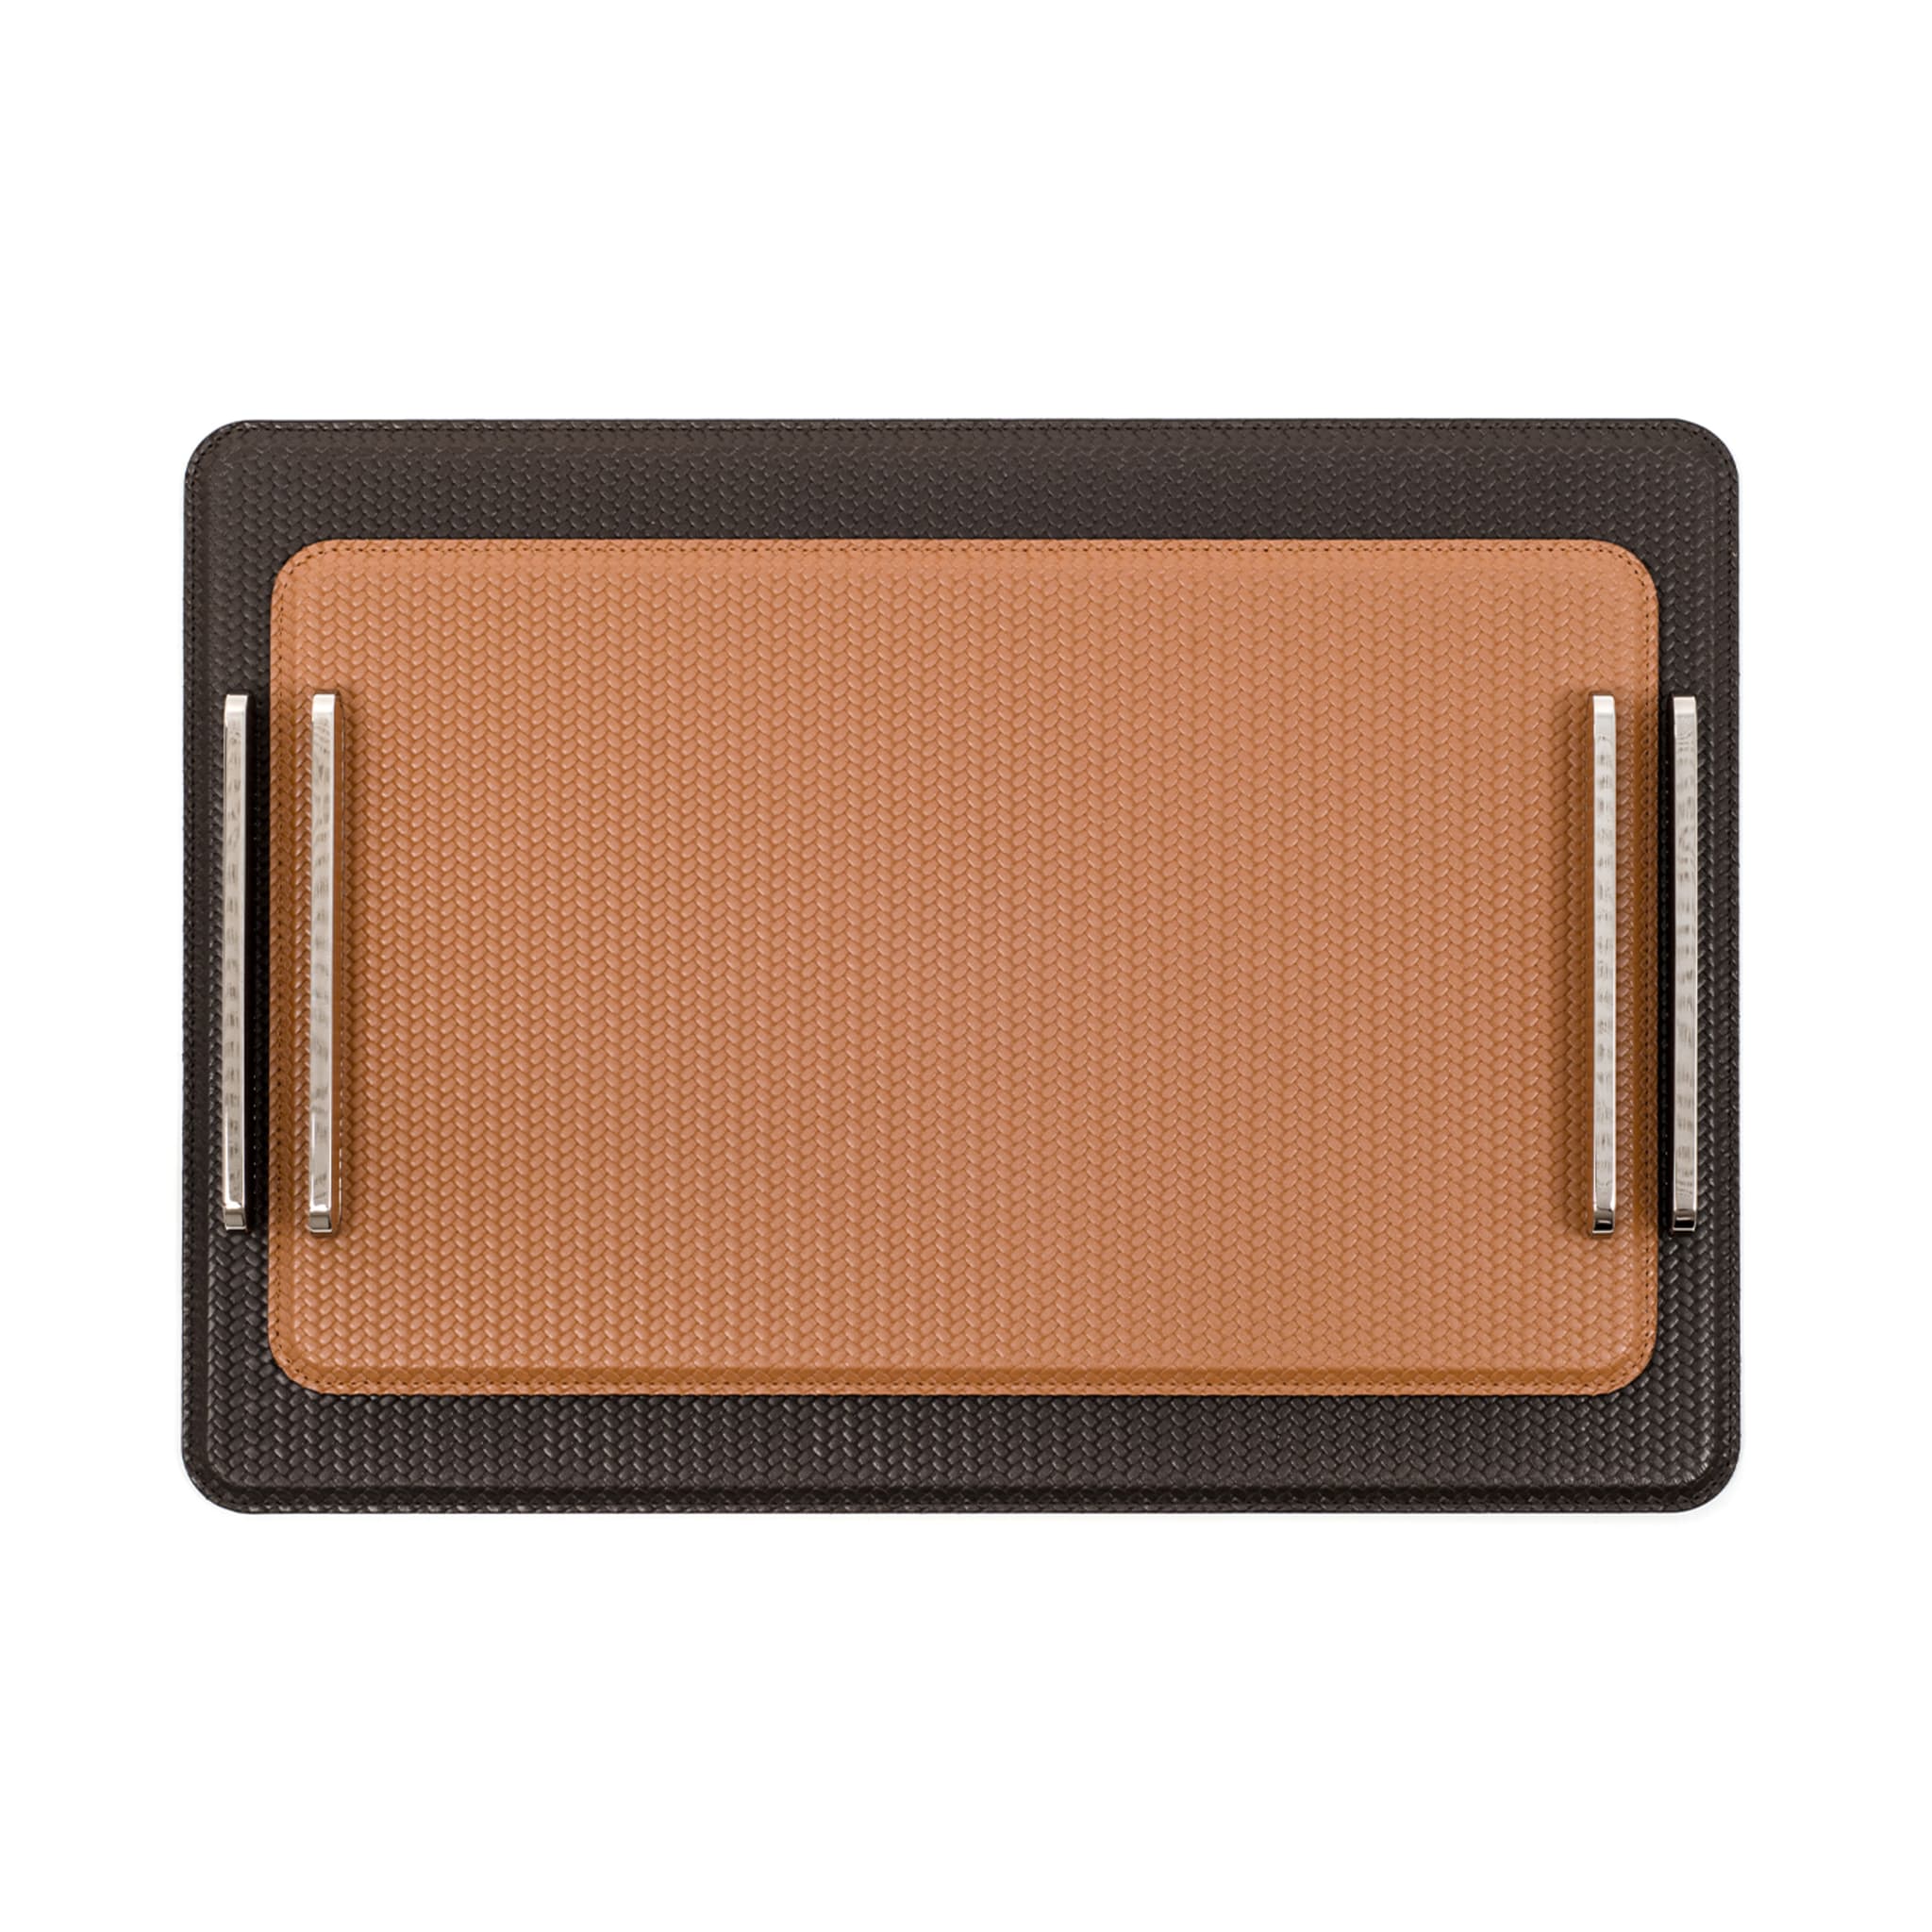 Este Small Rectangular Brown Leather Tray - Alternative view 3